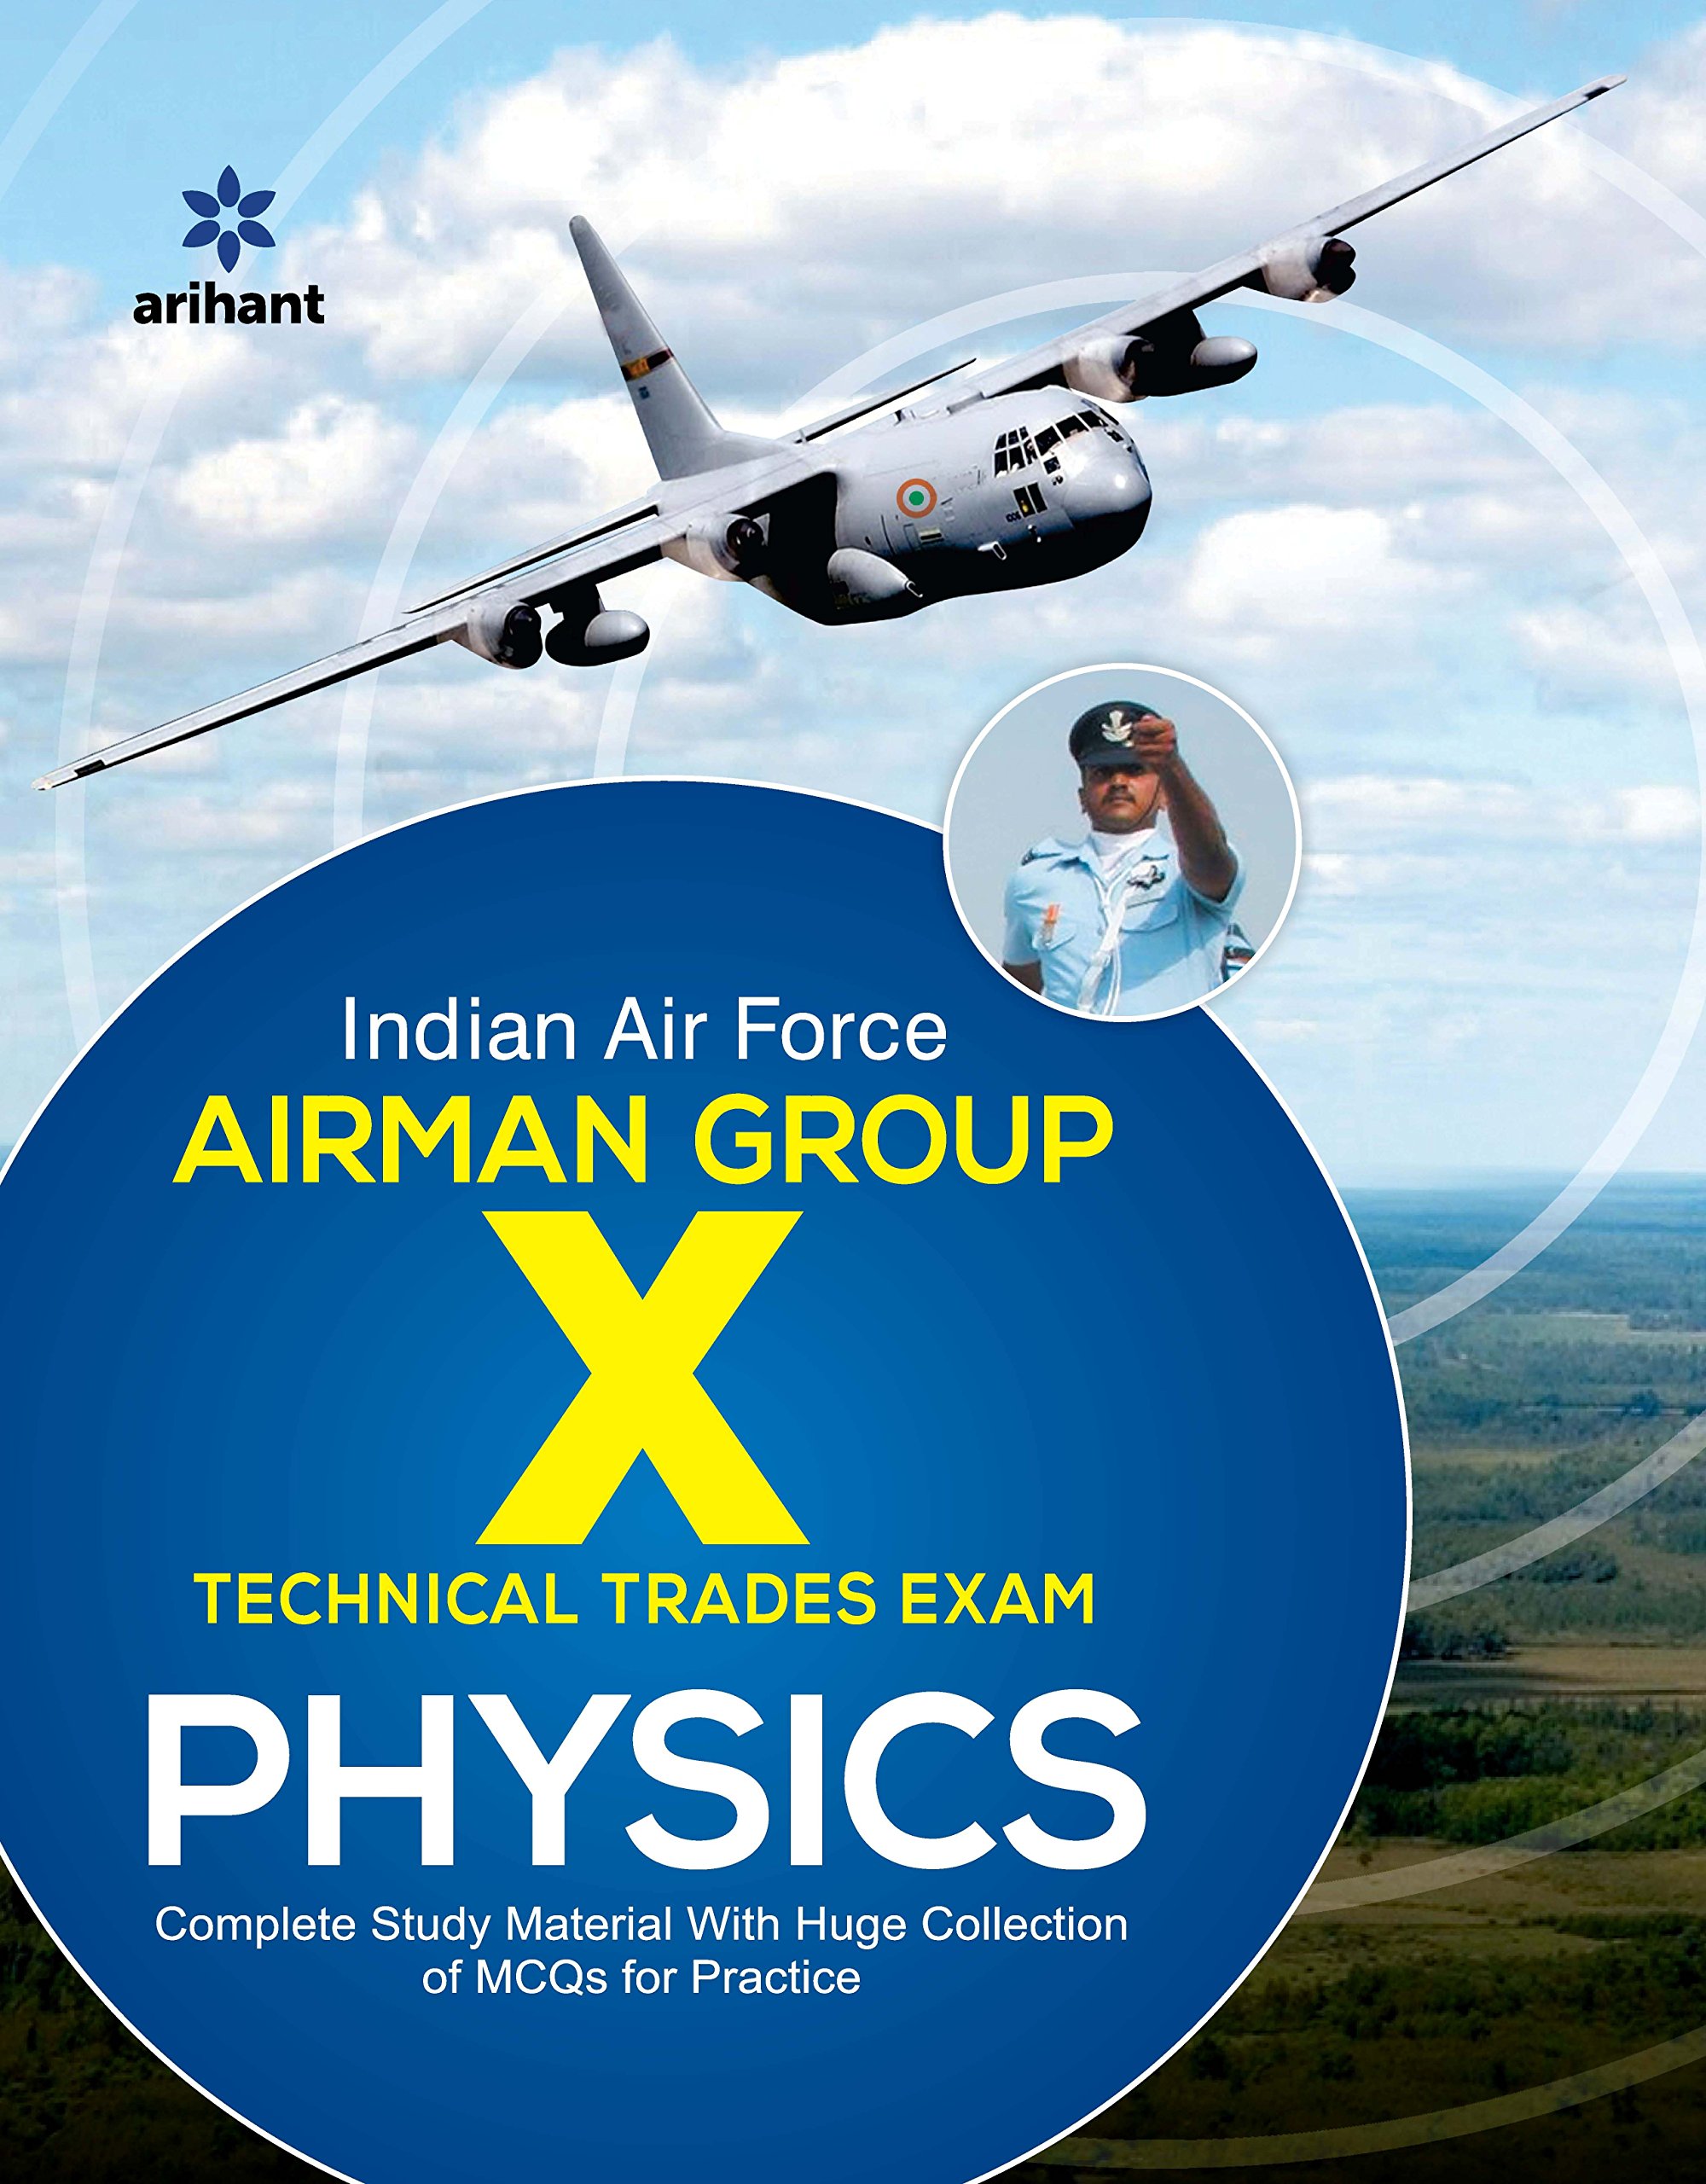 Indian Air Force Airman Group 'X' PHYSICS